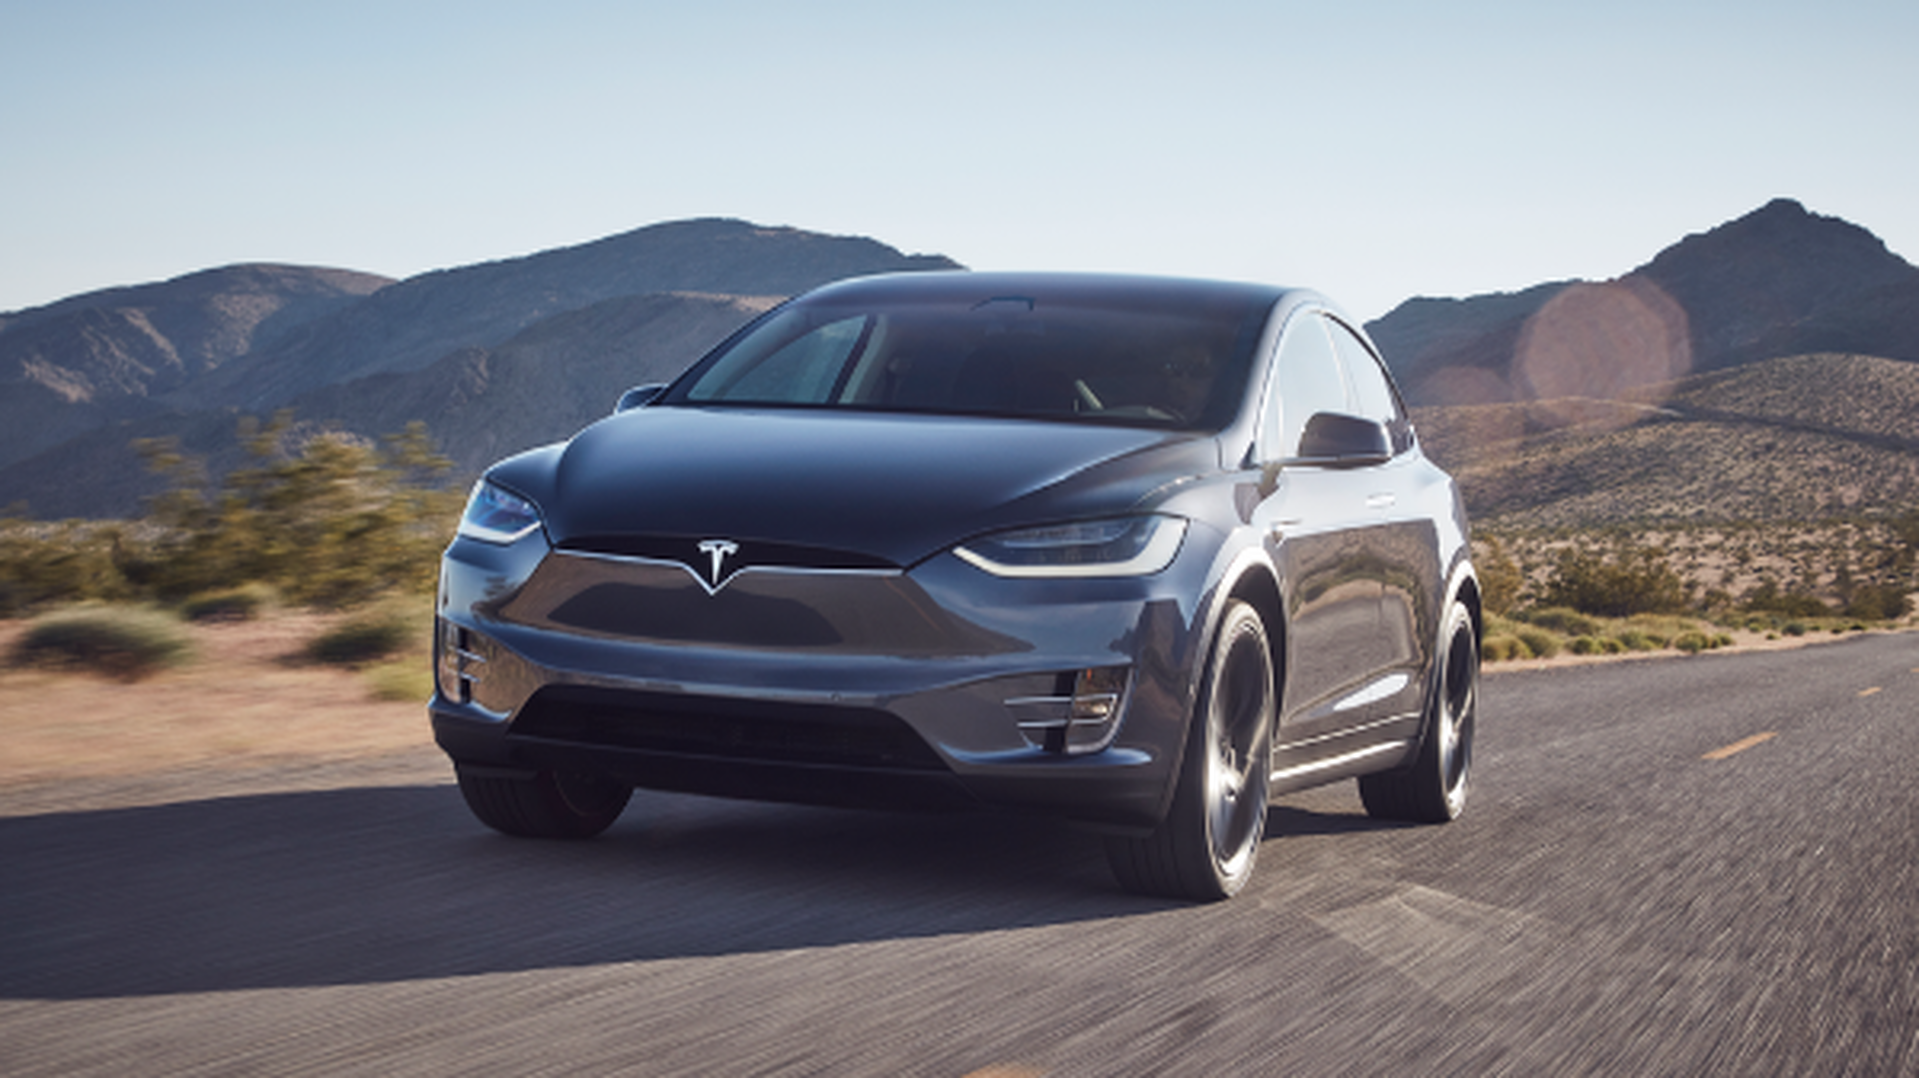 Autofile - News / Tesla bows to recall demand